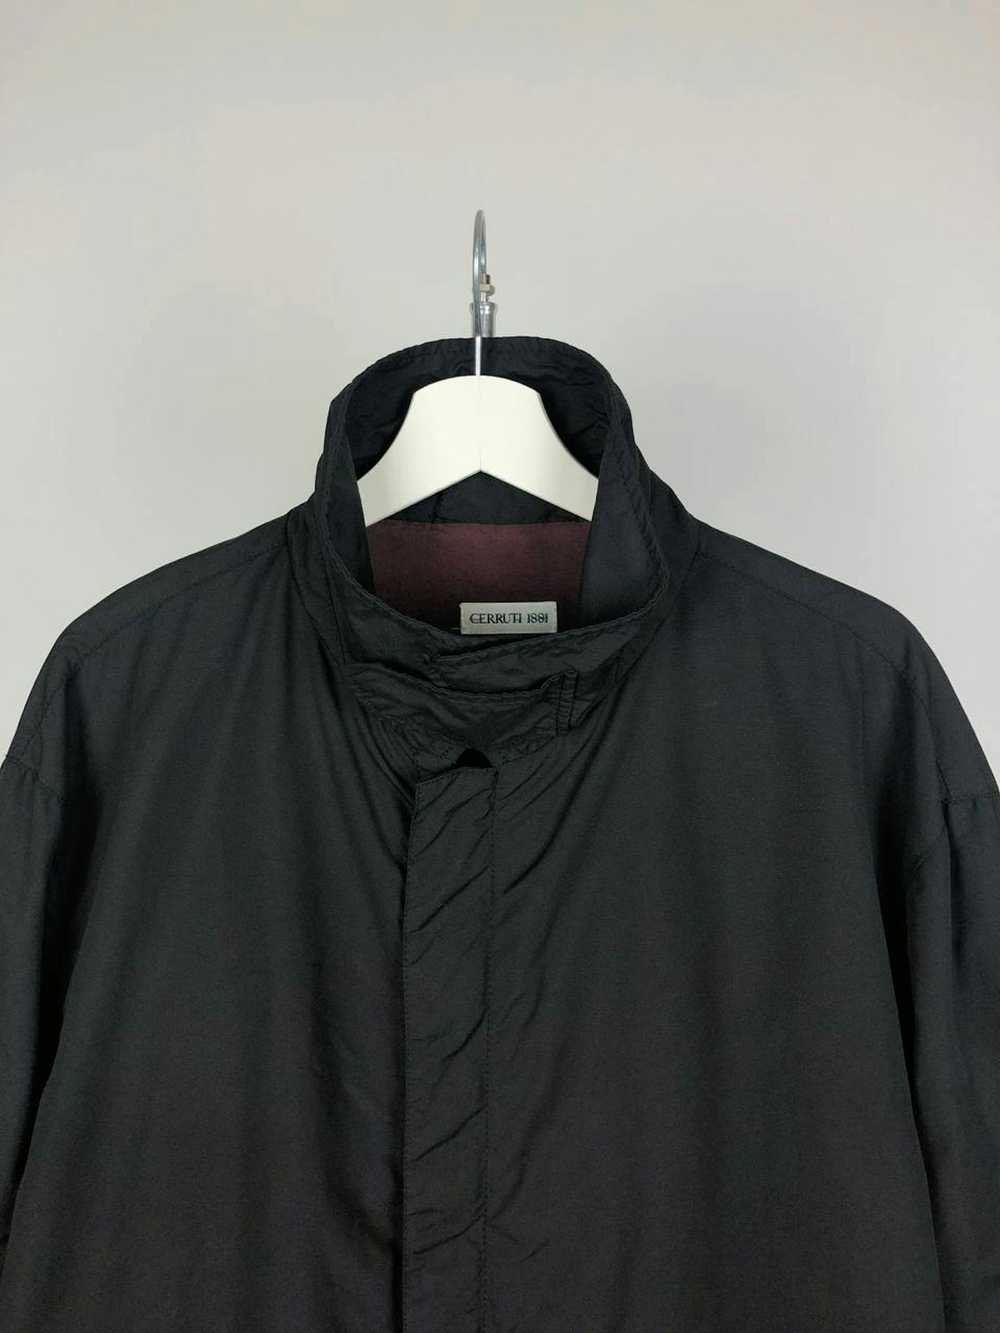 Cerruti 1881 Cerutti 1881 Vintage Jacket Black si… - image 2